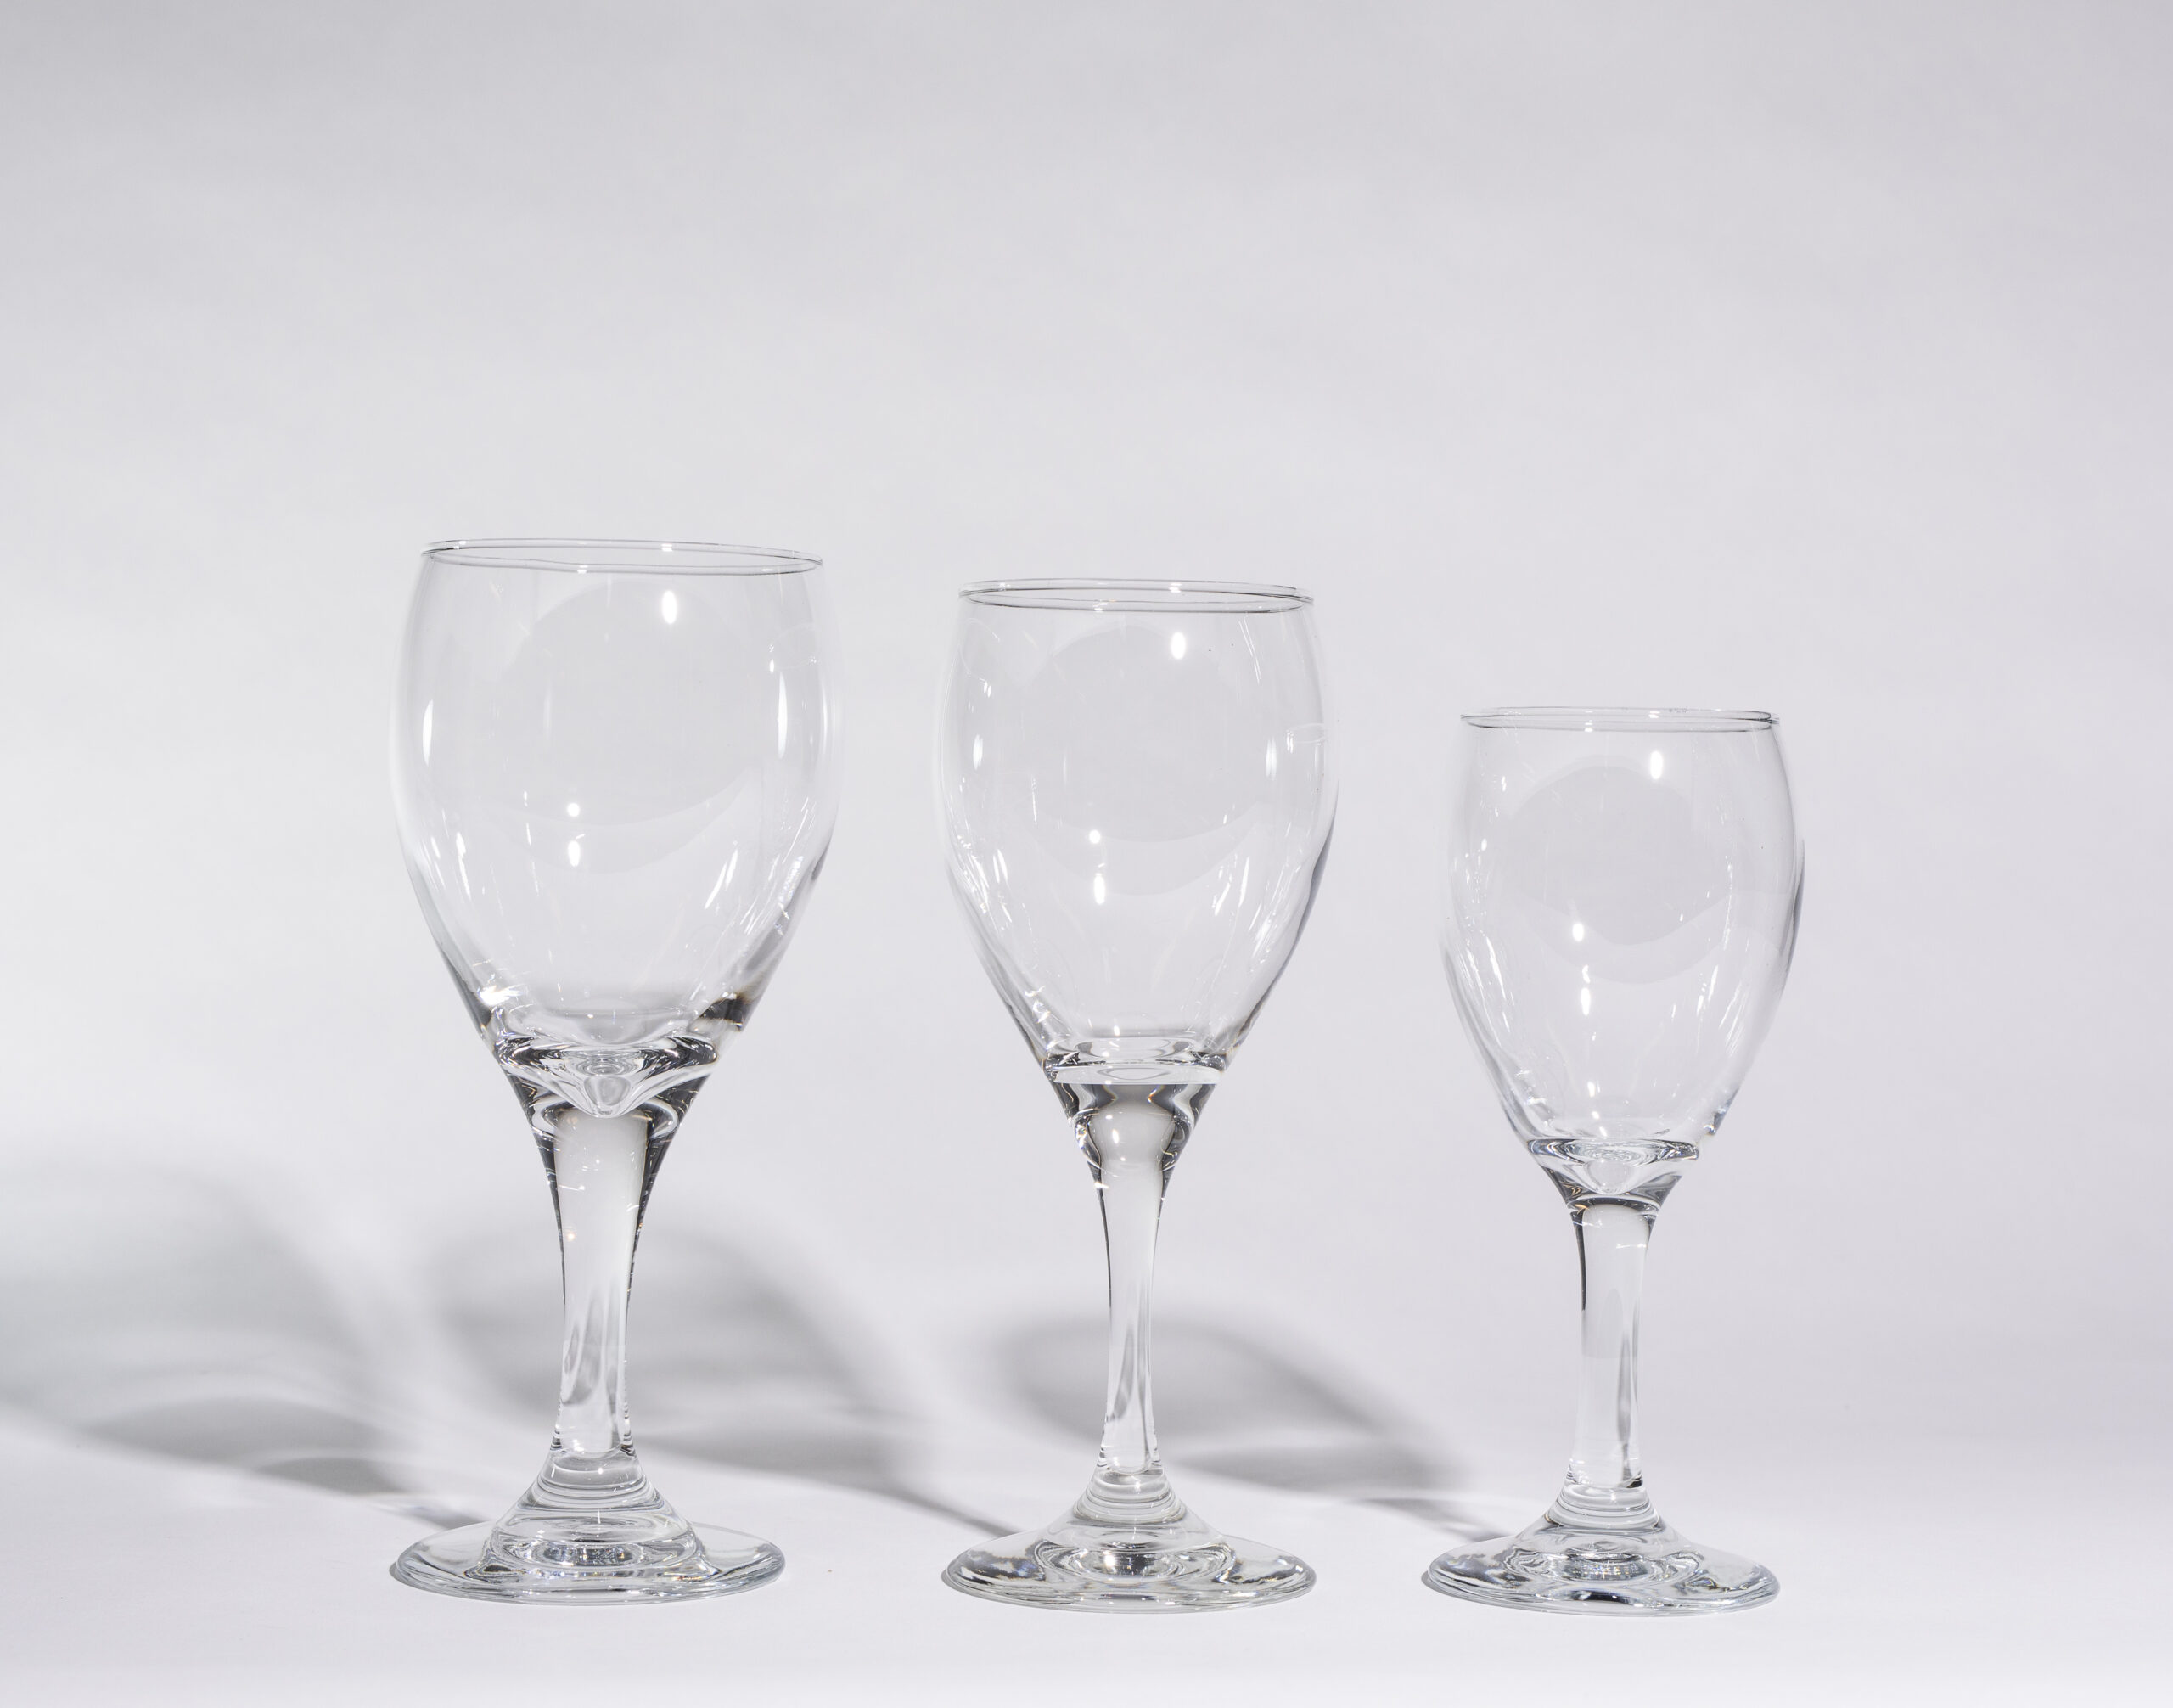 Wine glasses (10,8,6oz, stemmed)